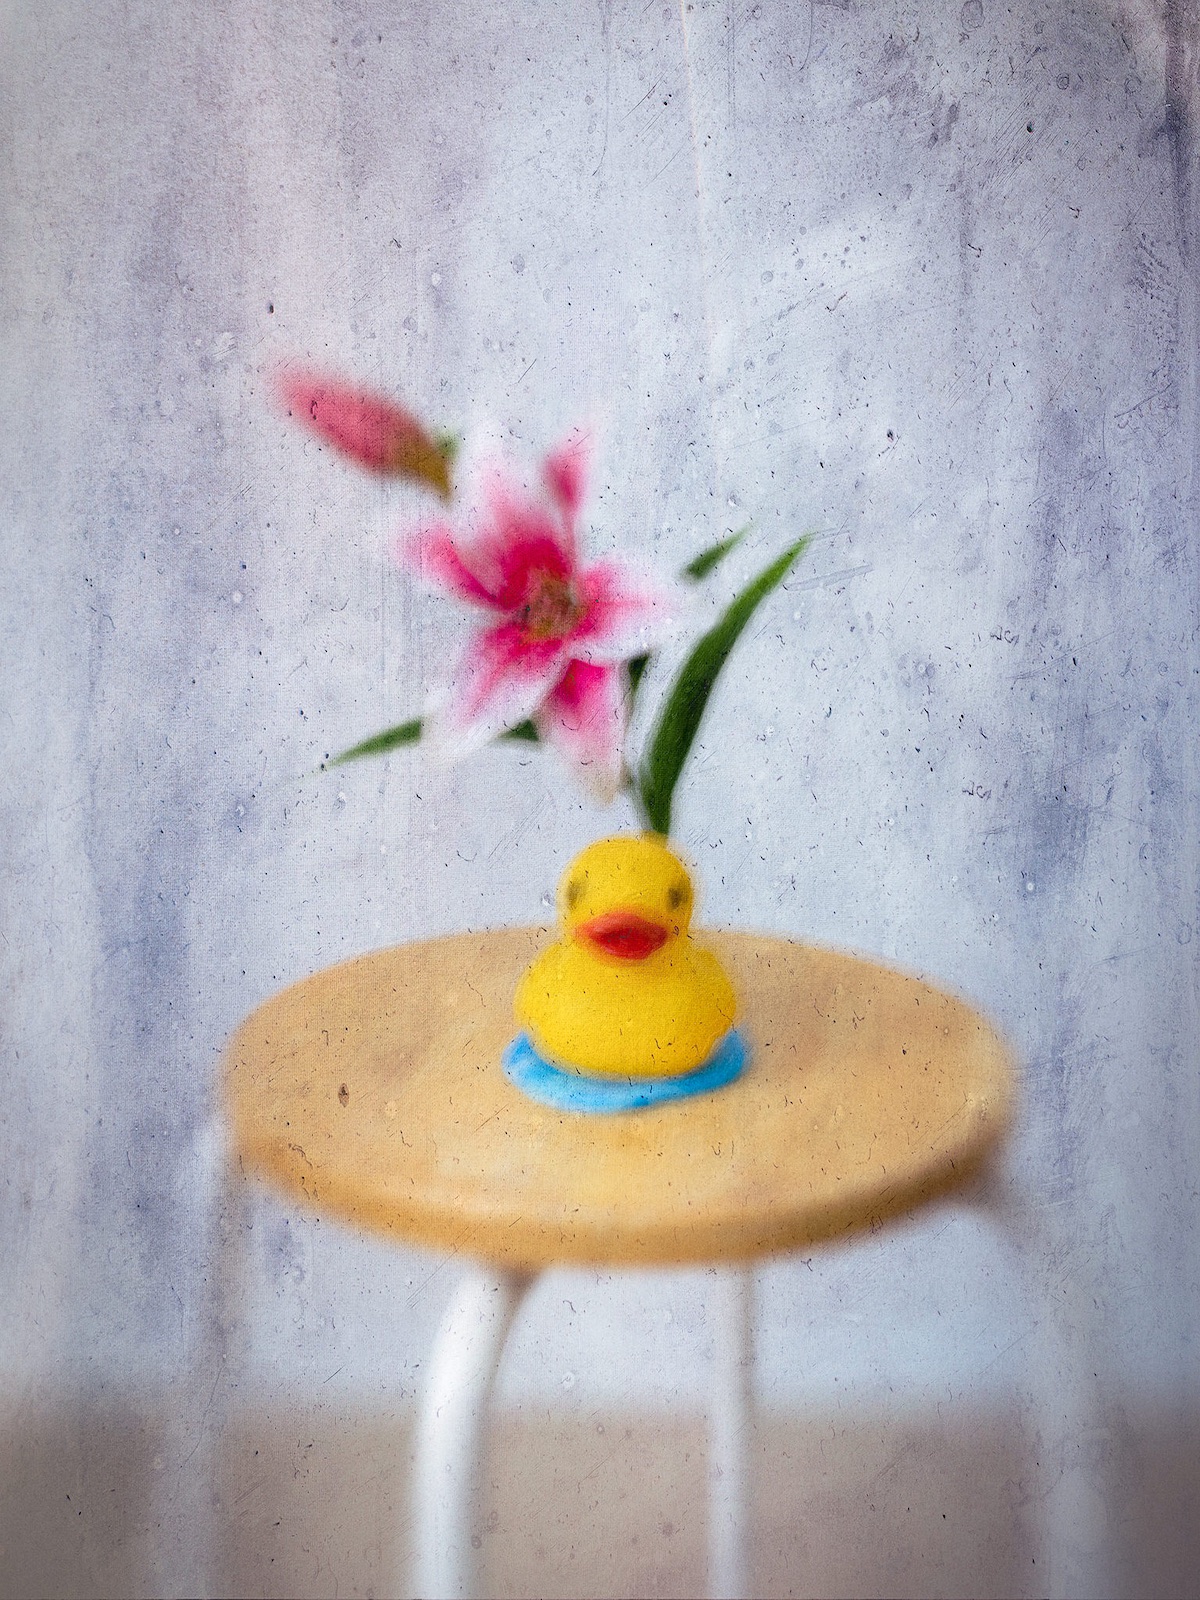 Enjoy The Little Things - Medium Format Photograph by Martin Nienberg